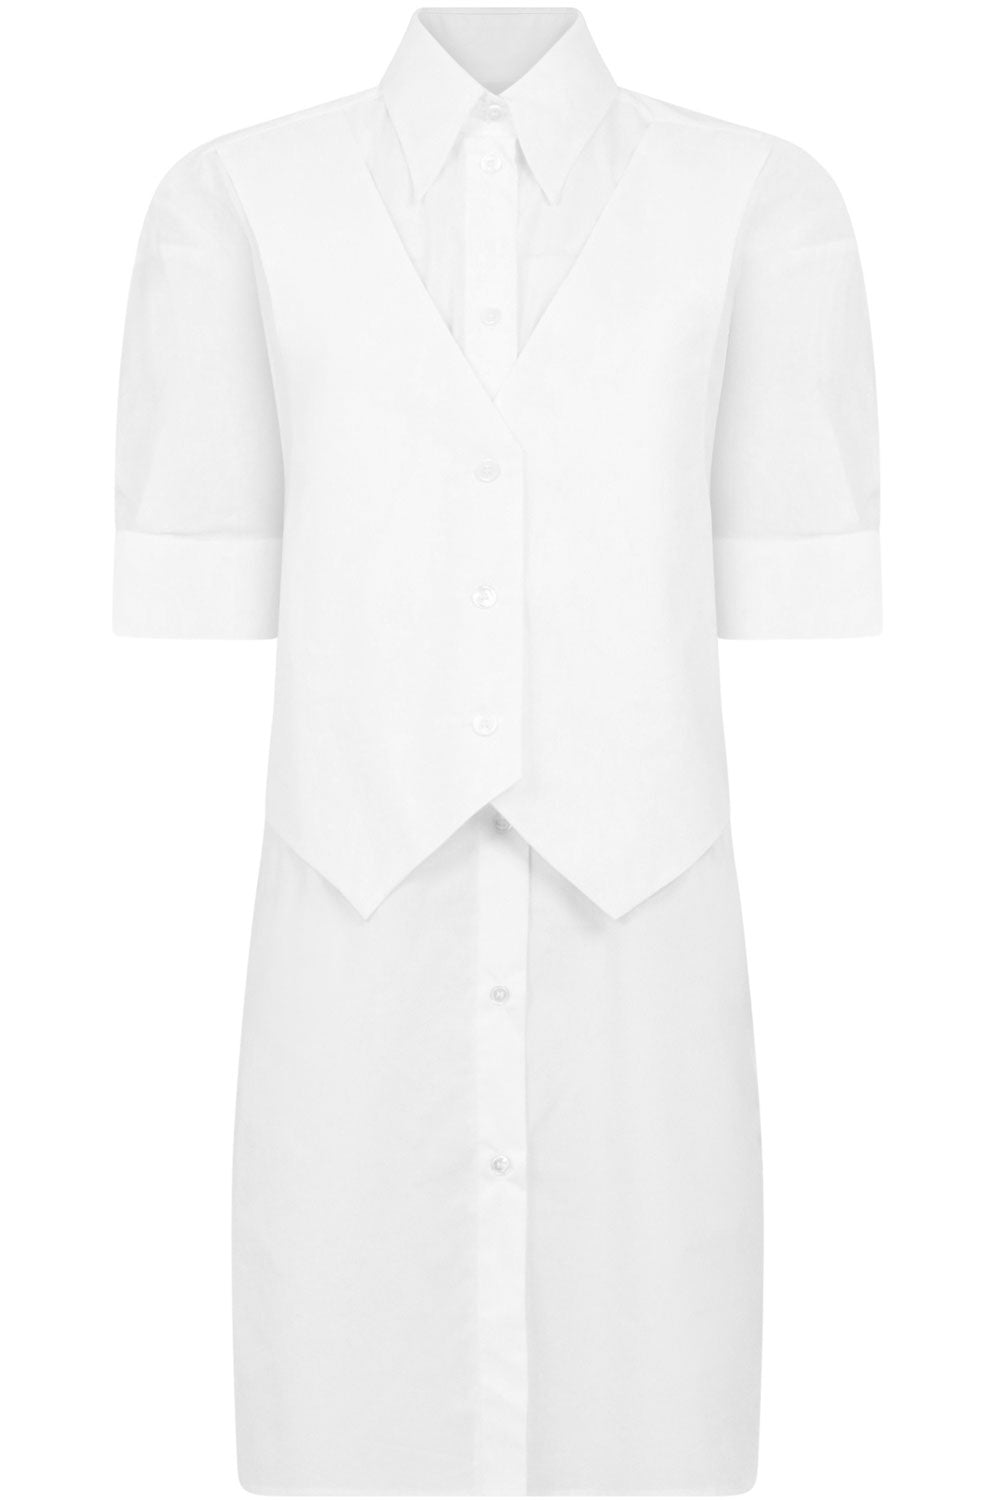 MM6 BY MAISON MARGIELA RTW DOUBLE LAYER SHIRT DRESS S/S WHITE